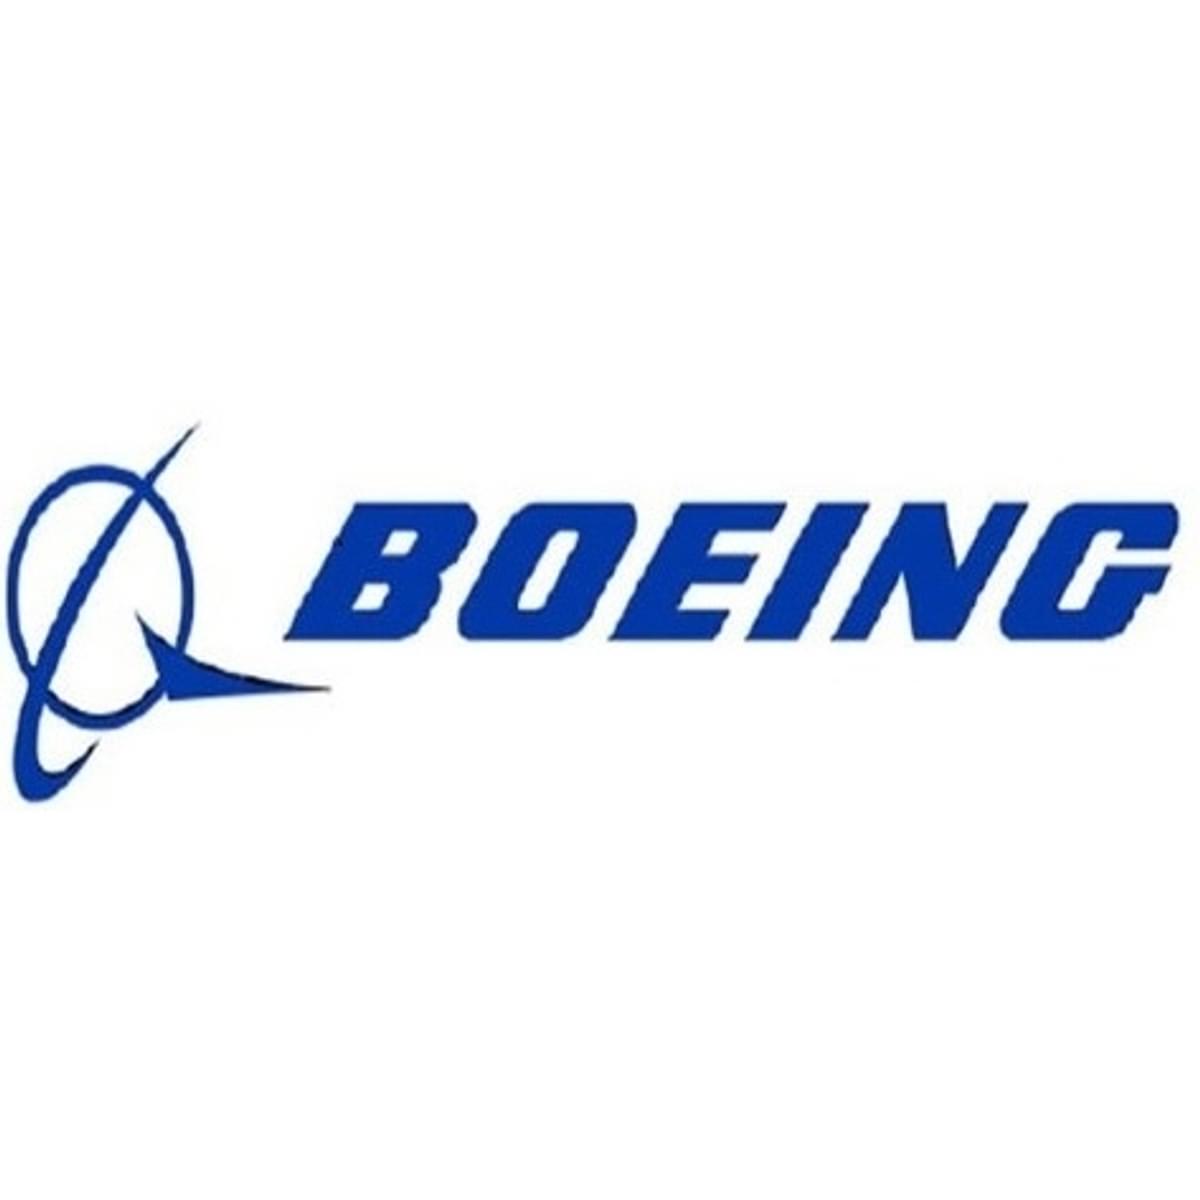 AWS en Boeing werken nauwer samen image